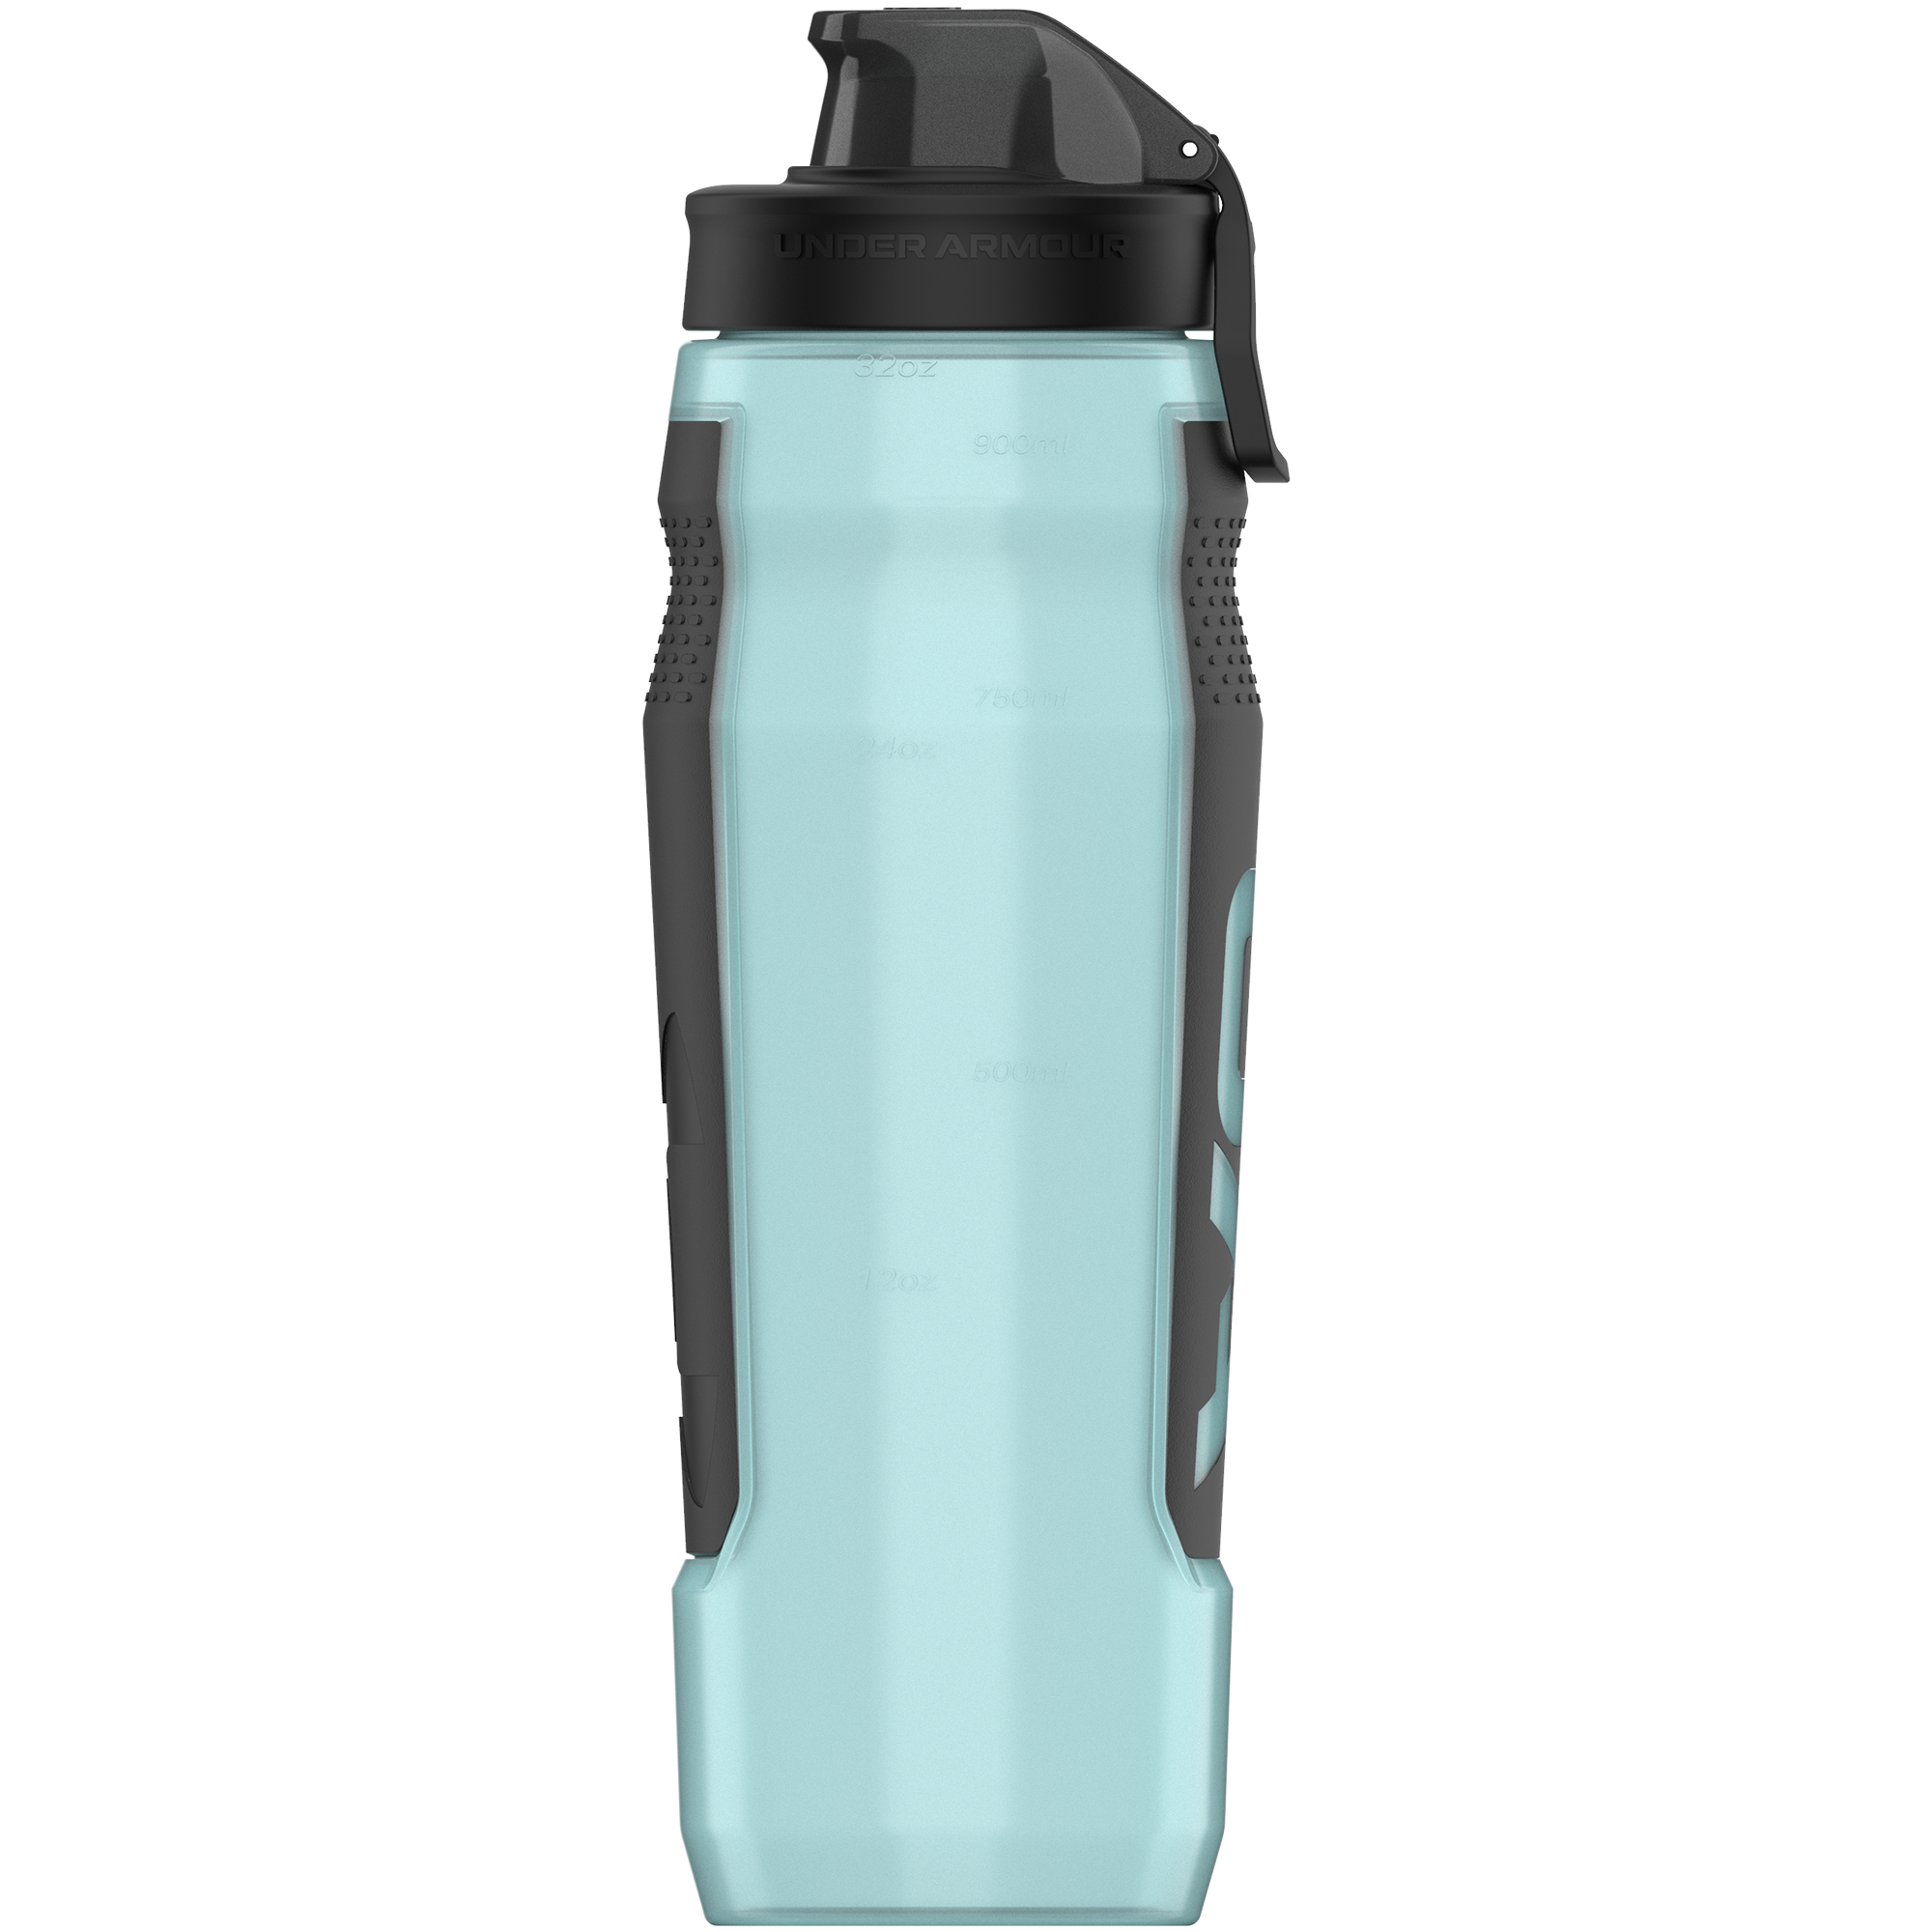 Under Armour Draft 24-oz. Tritan Water Bottle, Blue